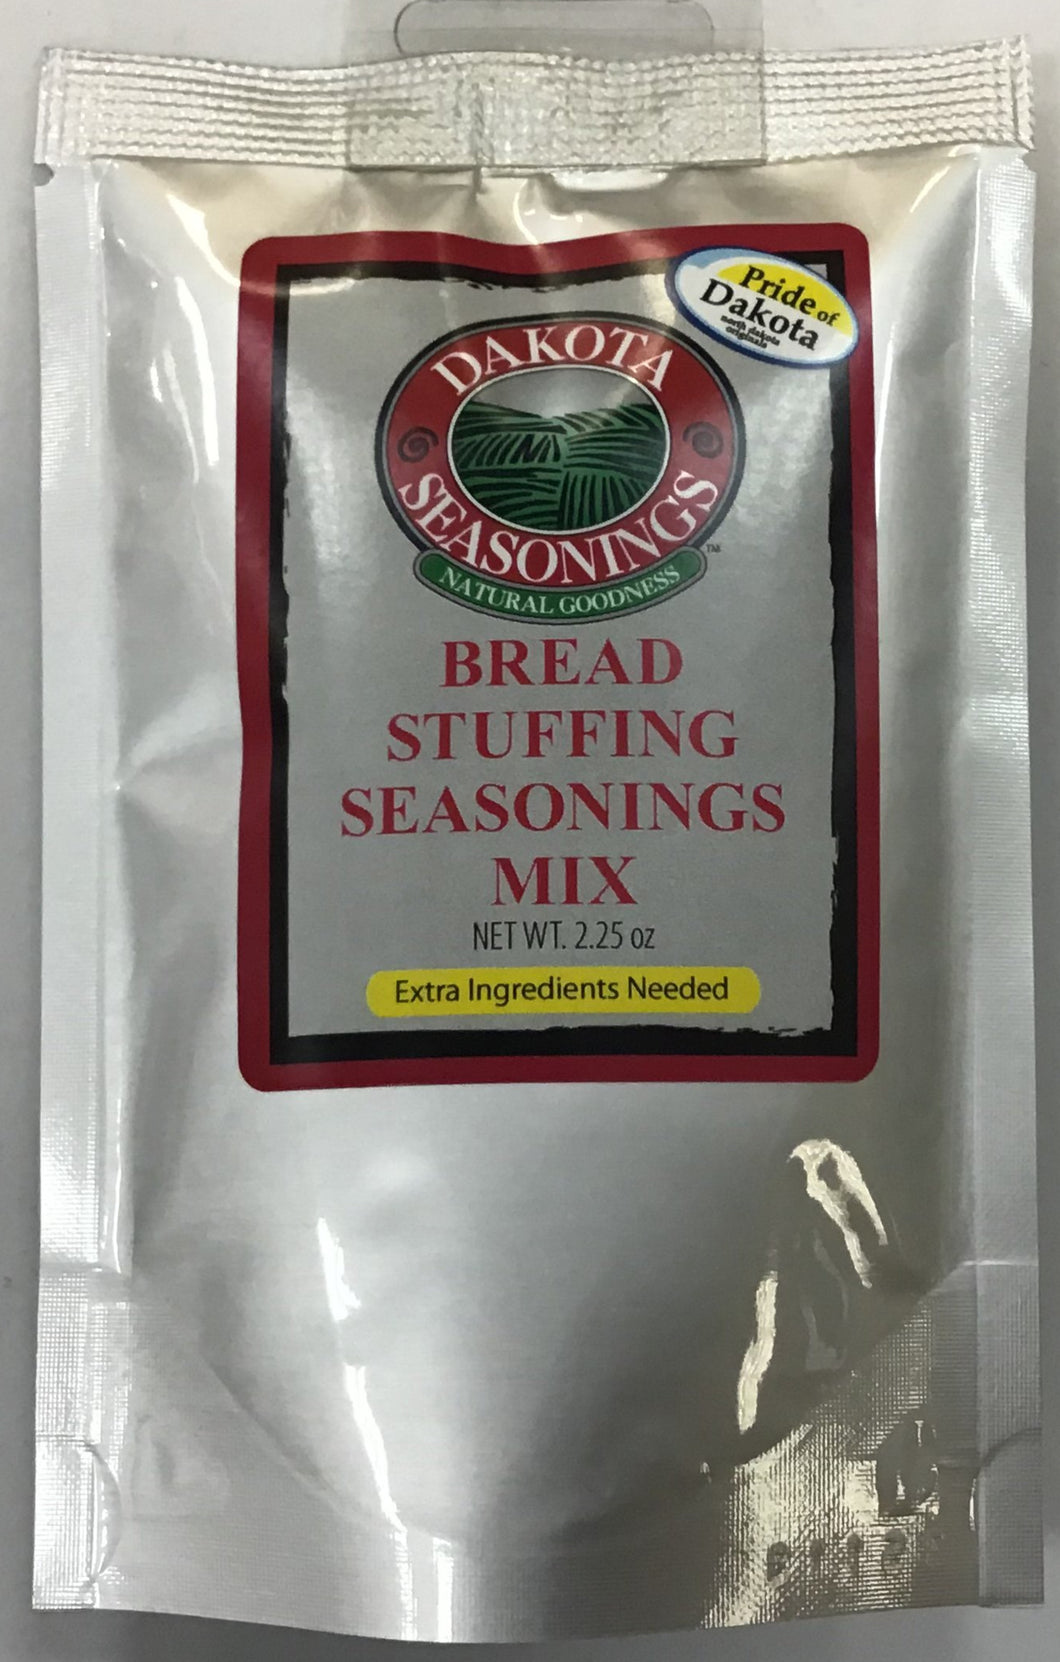 Dakota Seasonings Bread Stuffing Seasonings Mix